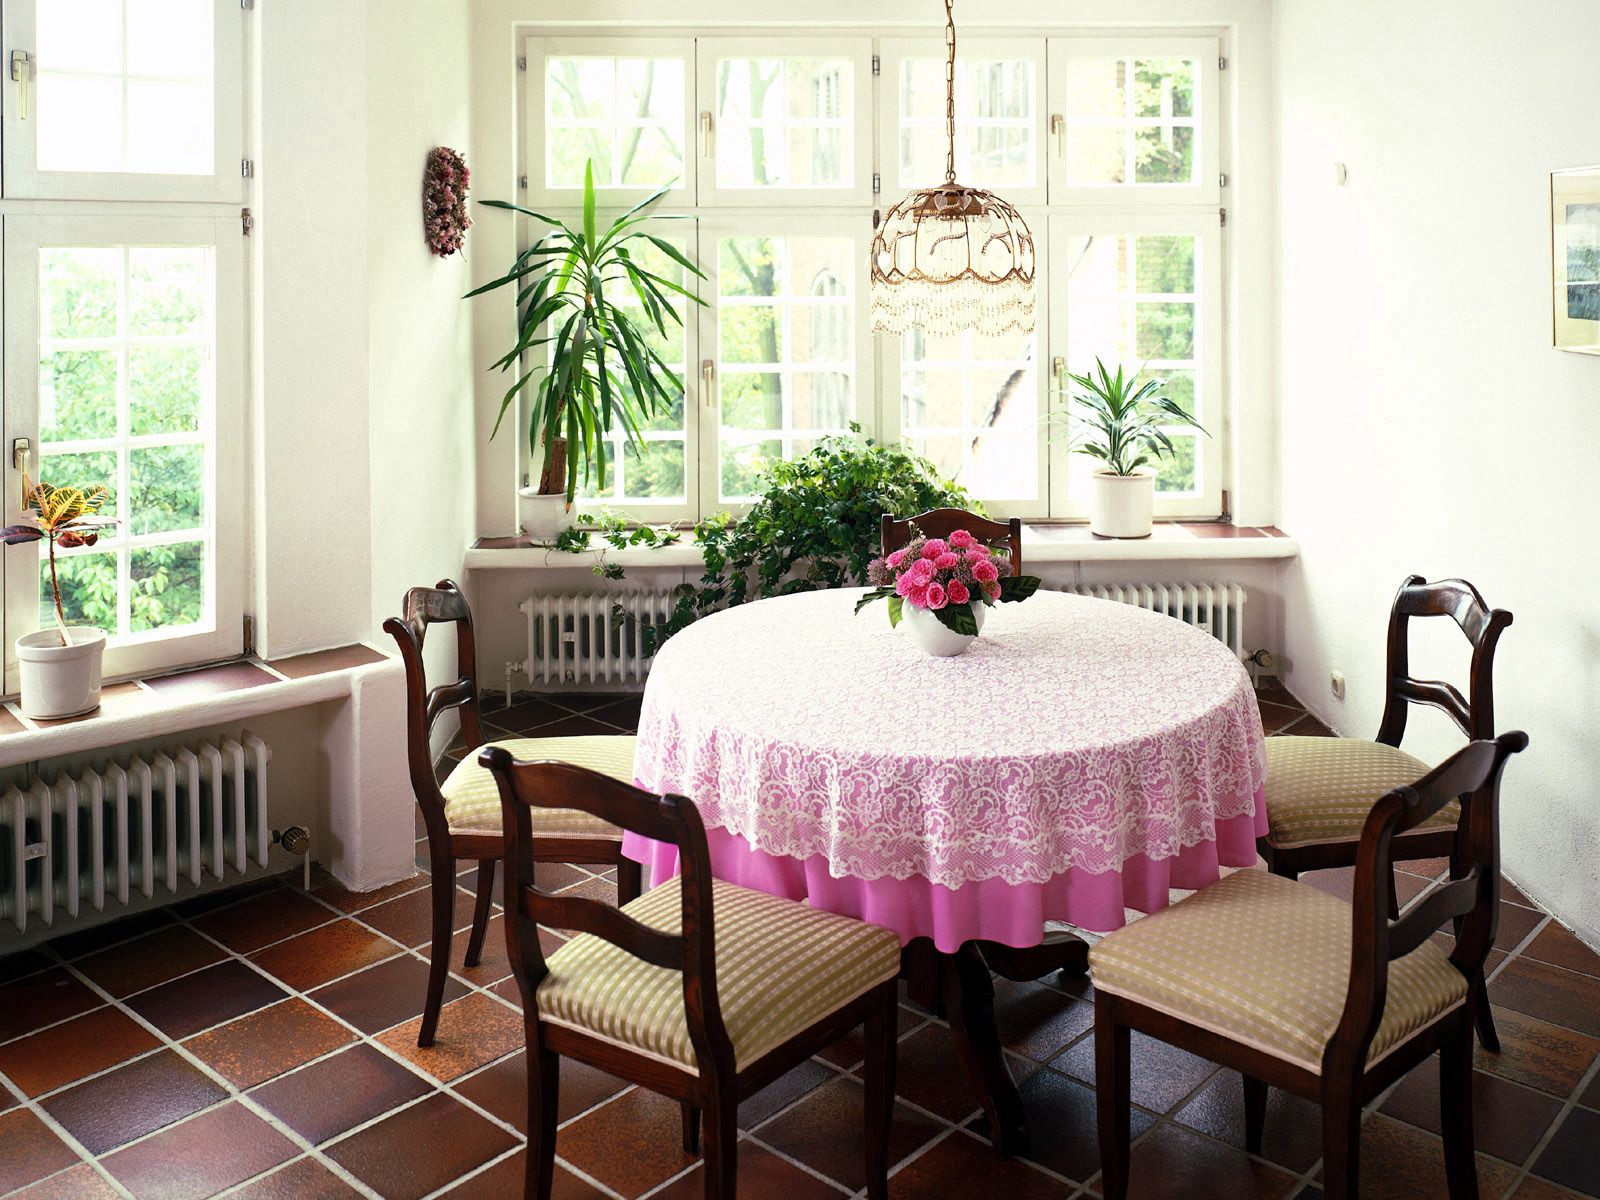 plants, windows, miscellanea, miscellaneous, table, style